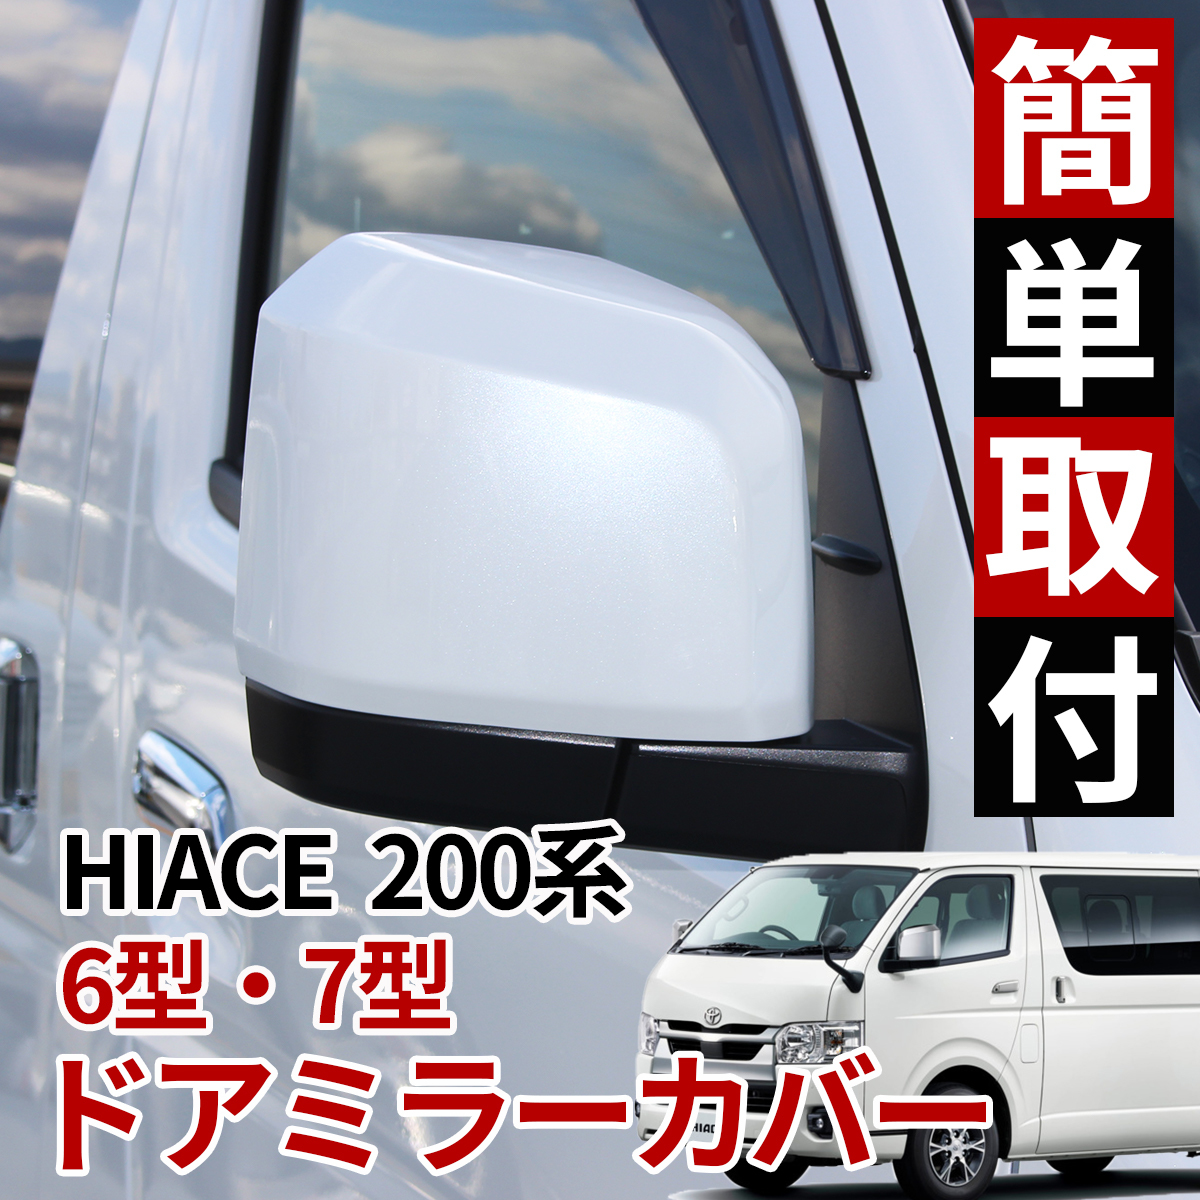 HIACE ハイエース 200系 6型 ドア ミラーカバー 070 パール ホワイト 塗装品 ドアミラーカバー 車検 対応 純正色 塗装済み 1_画像2